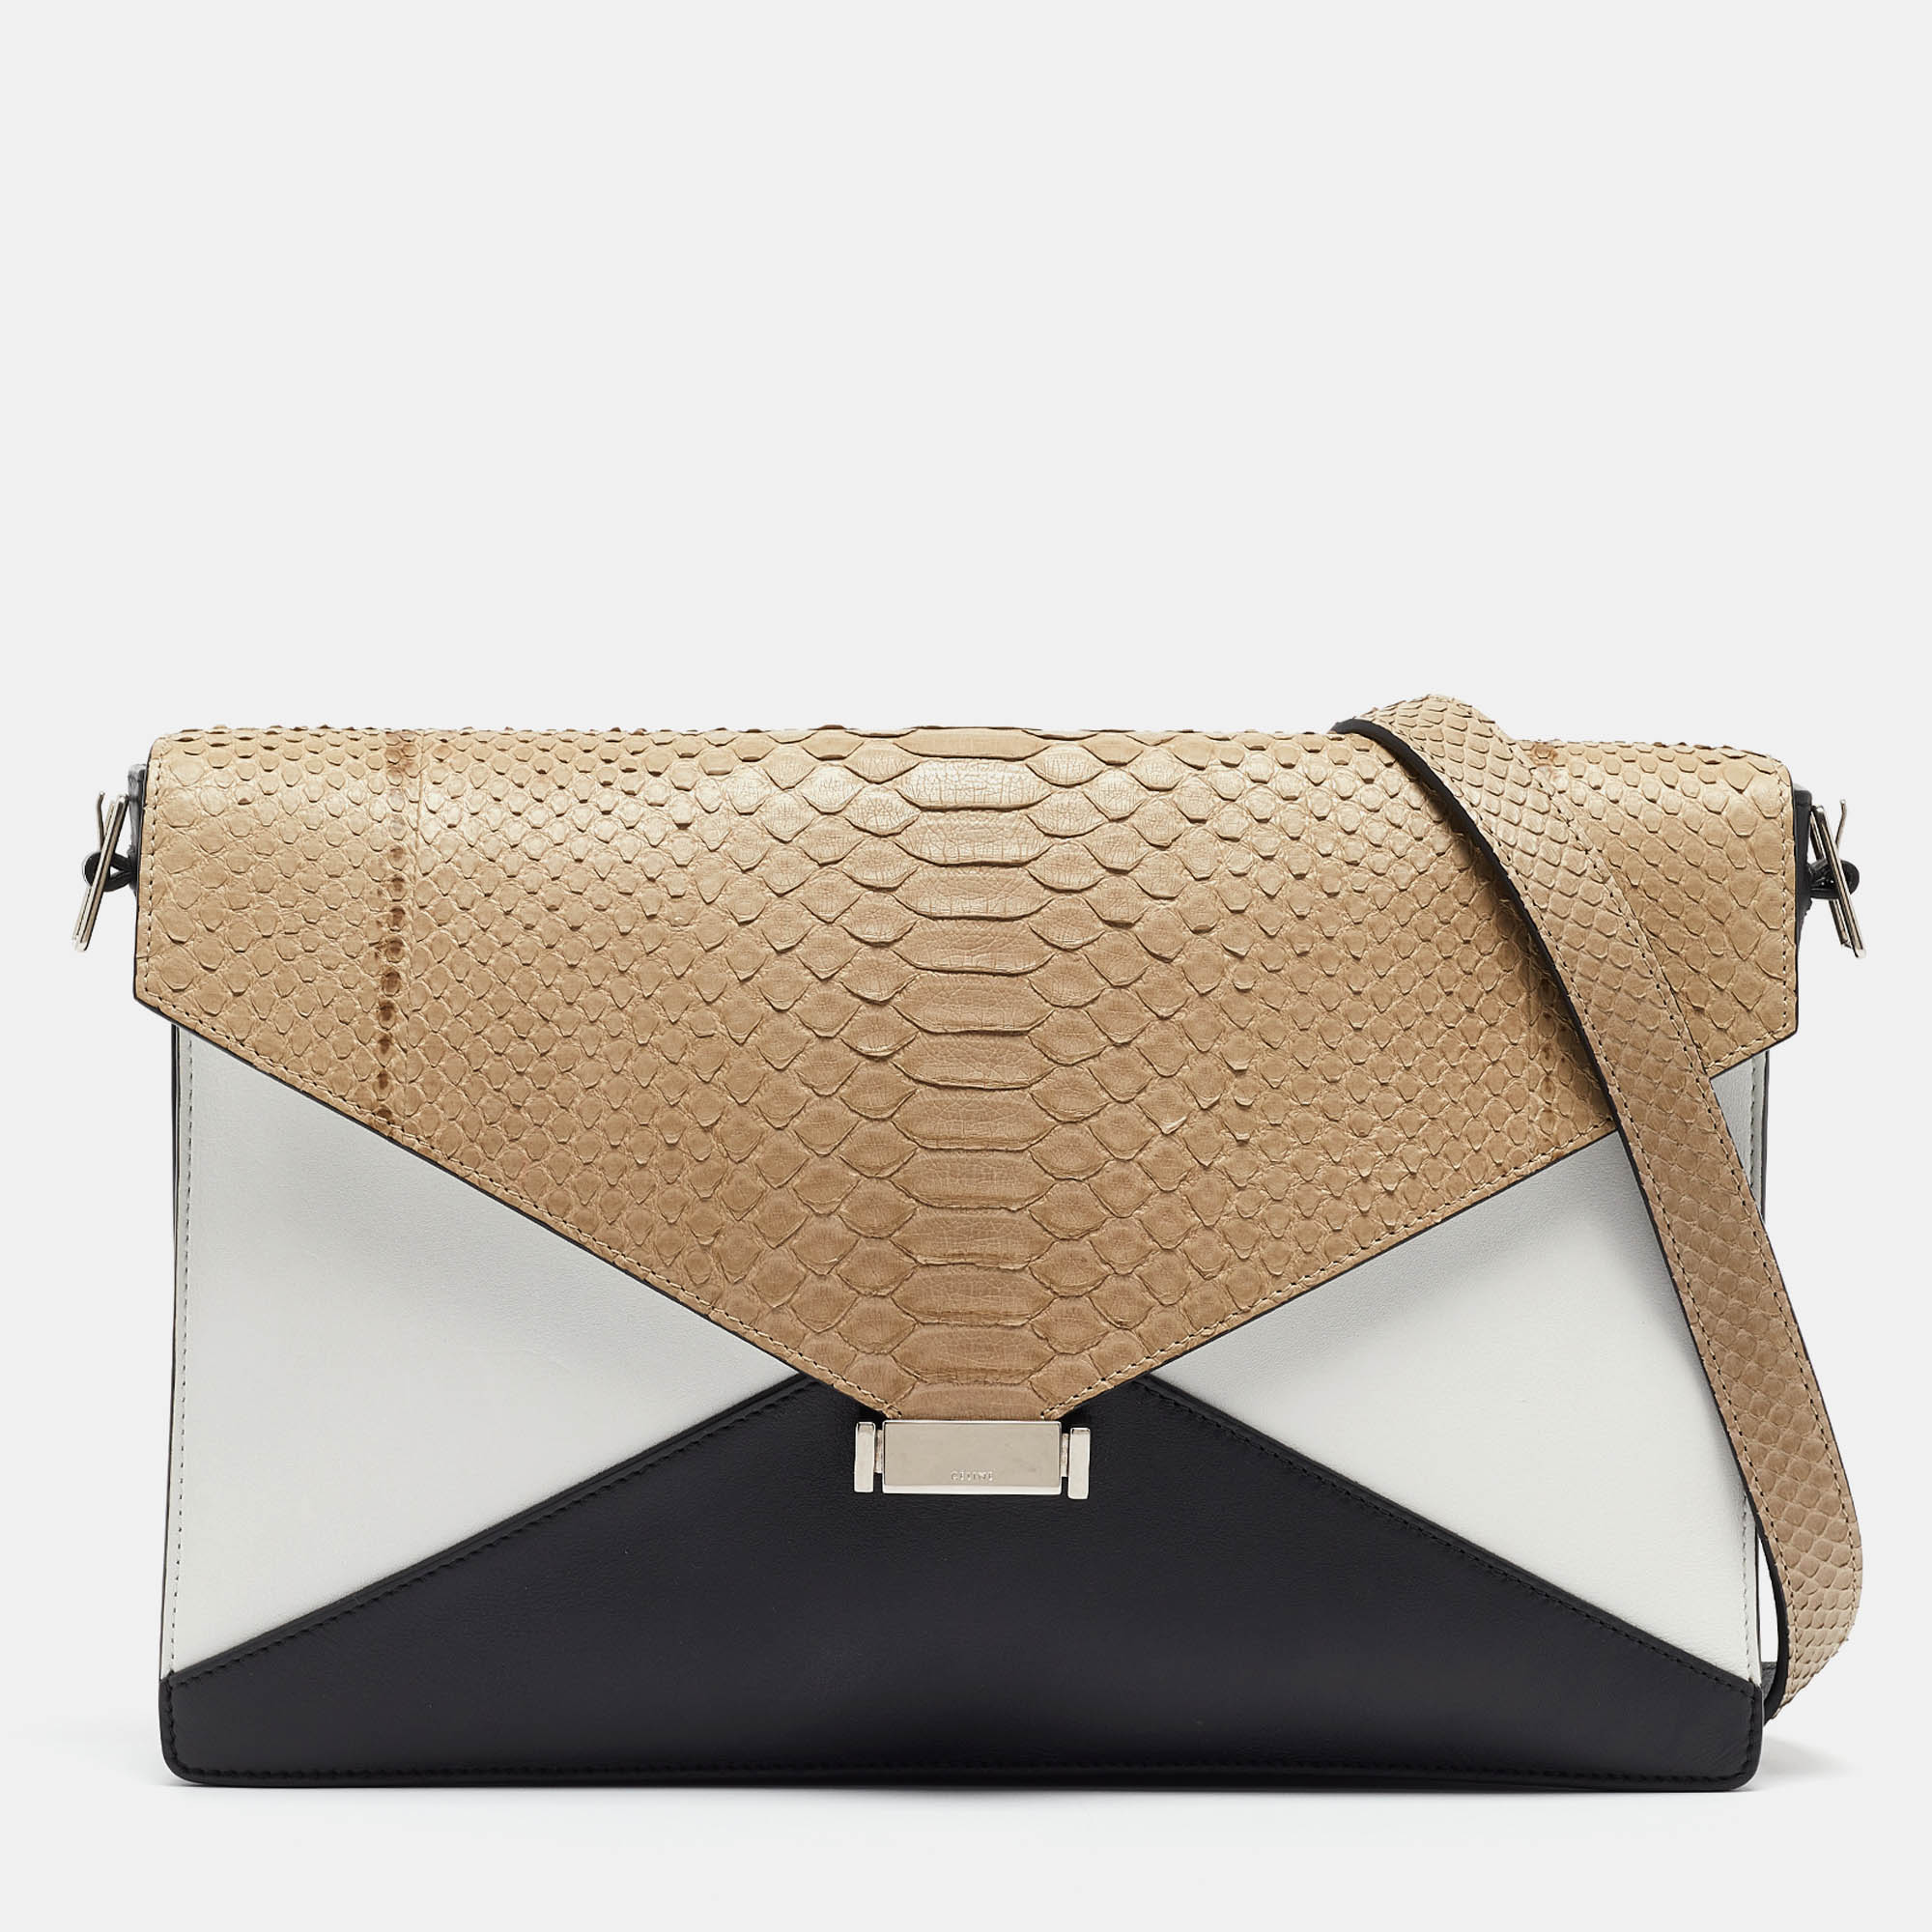 Celine Tricolor Python and Leather Medium Diamond Shoulder Bag